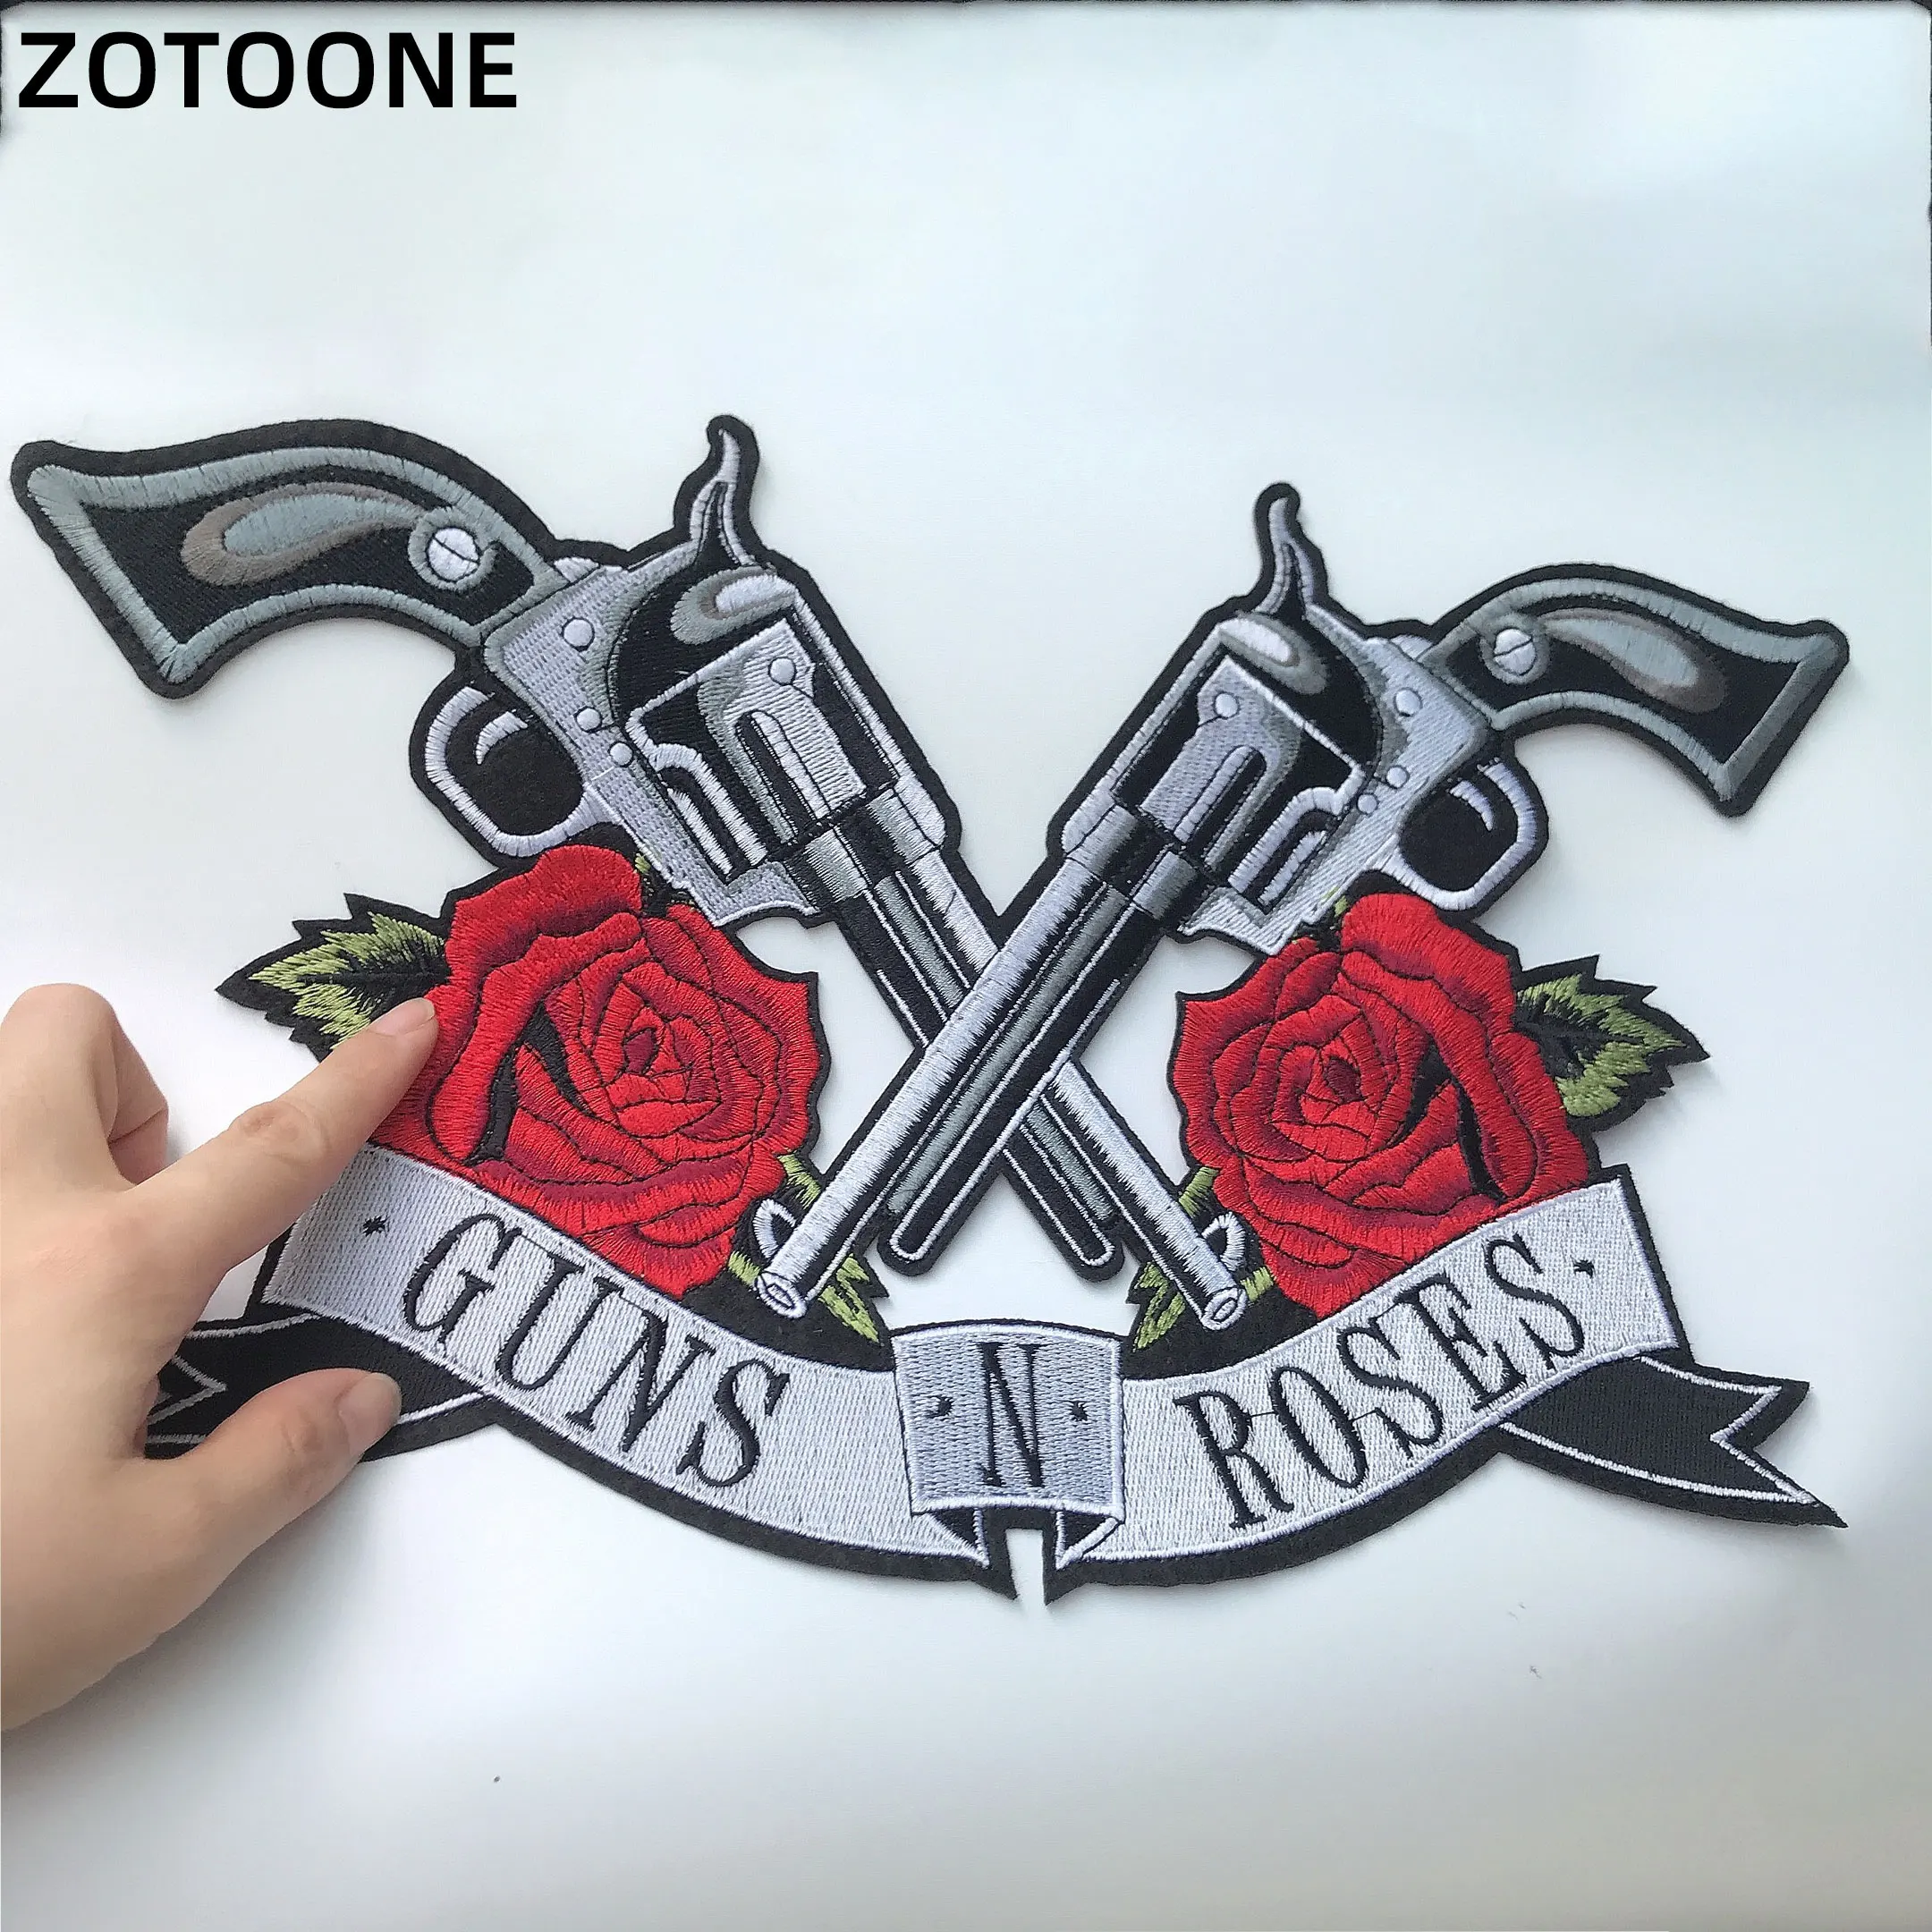 Parches de Guns N Roses, insignia de Pacth de banda de música Rock para planchar, parches bordados para ropa, pegatinas, apliques para chaqueta vaquera